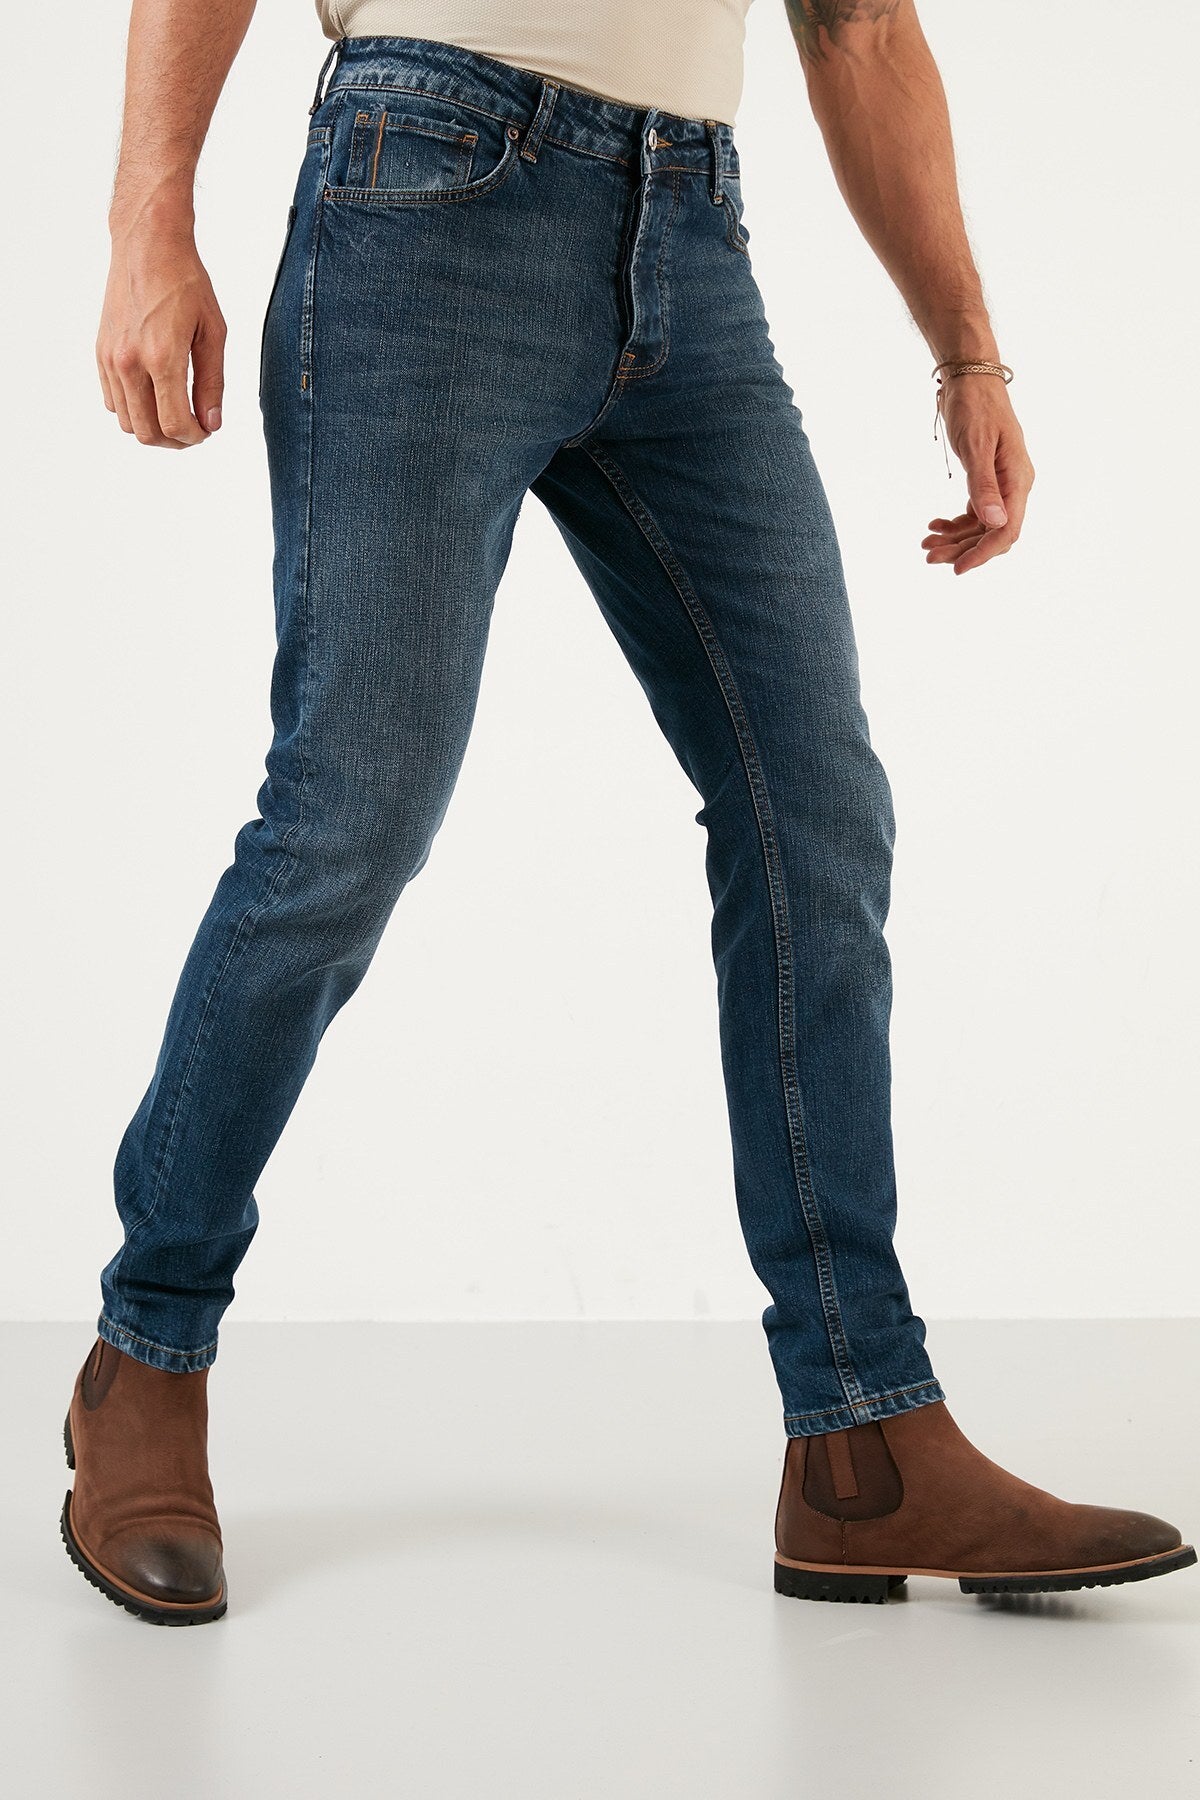 Buratti Cotton Normal Waist Slim Fit Slim Fit Jeans Men Denim Trousers